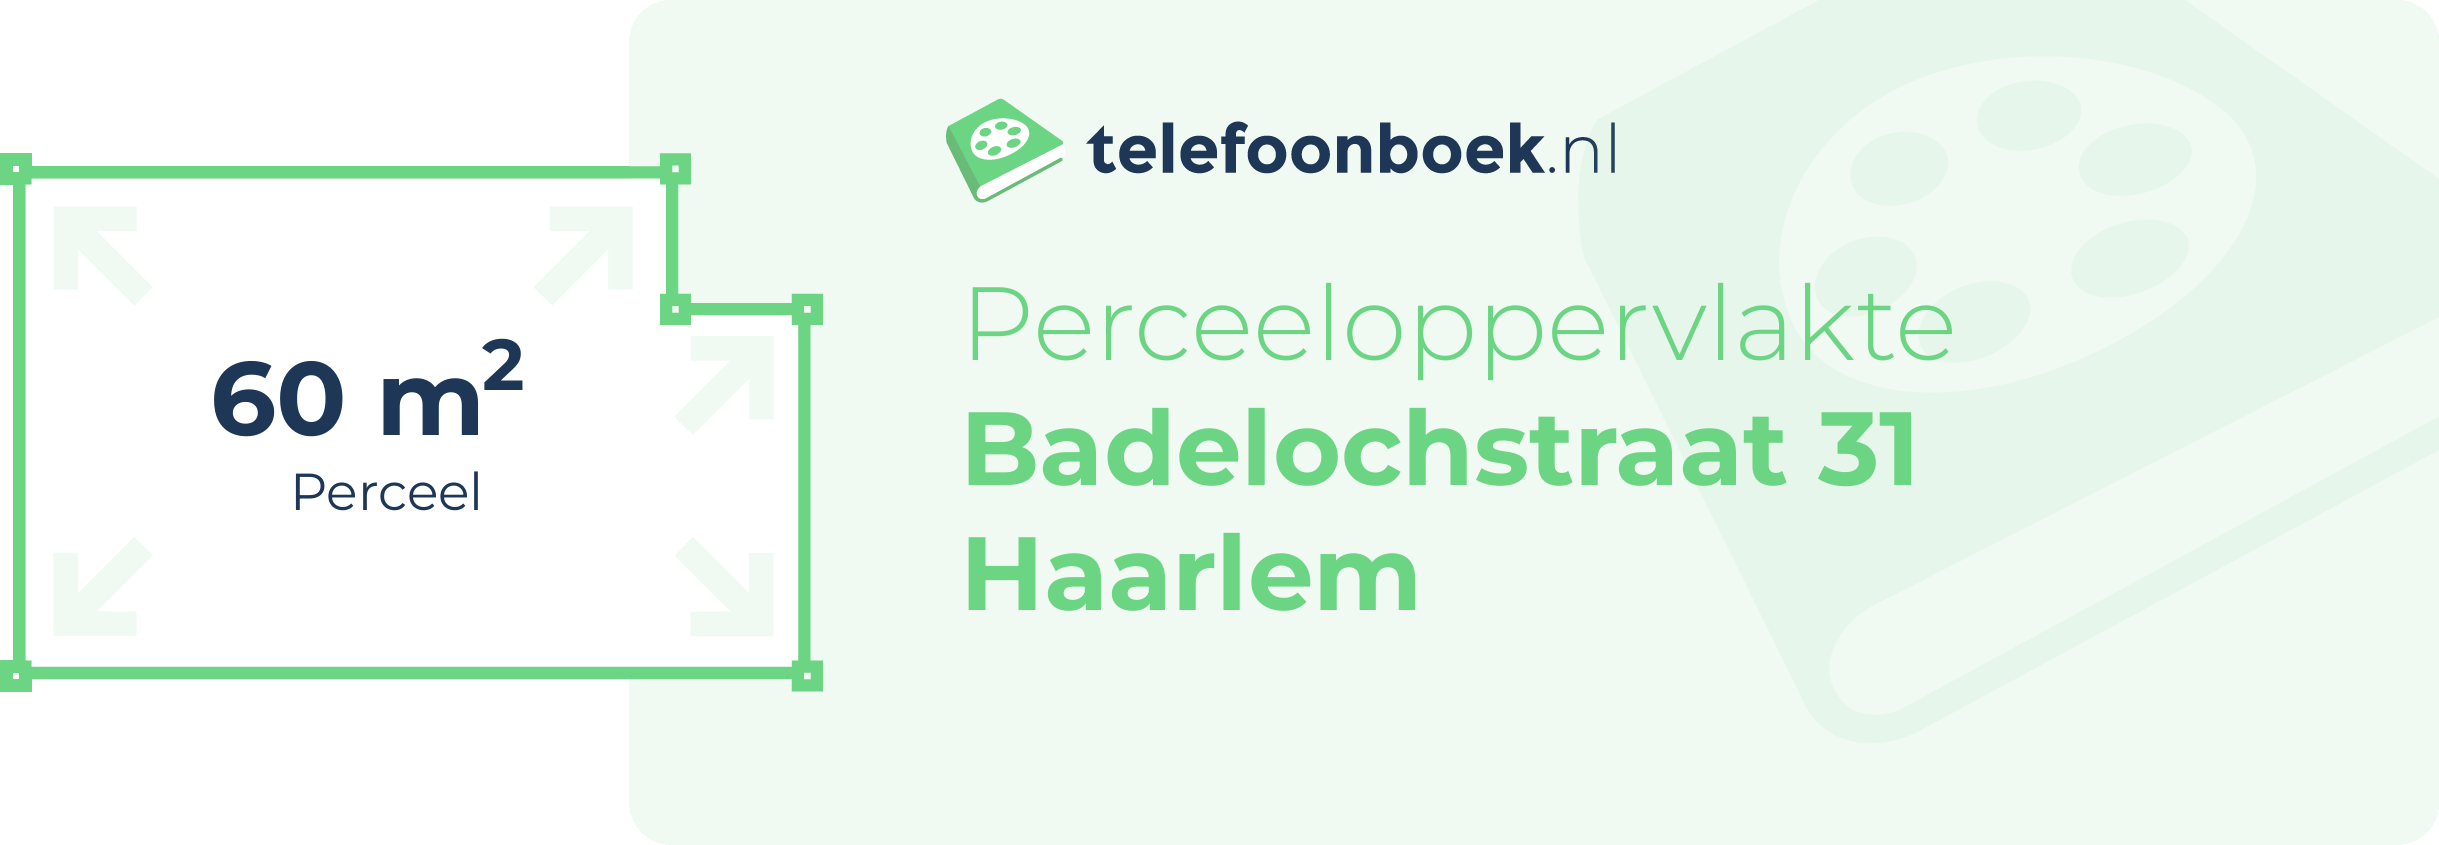 Perceeloppervlakte Badelochstraat 31 Haarlem